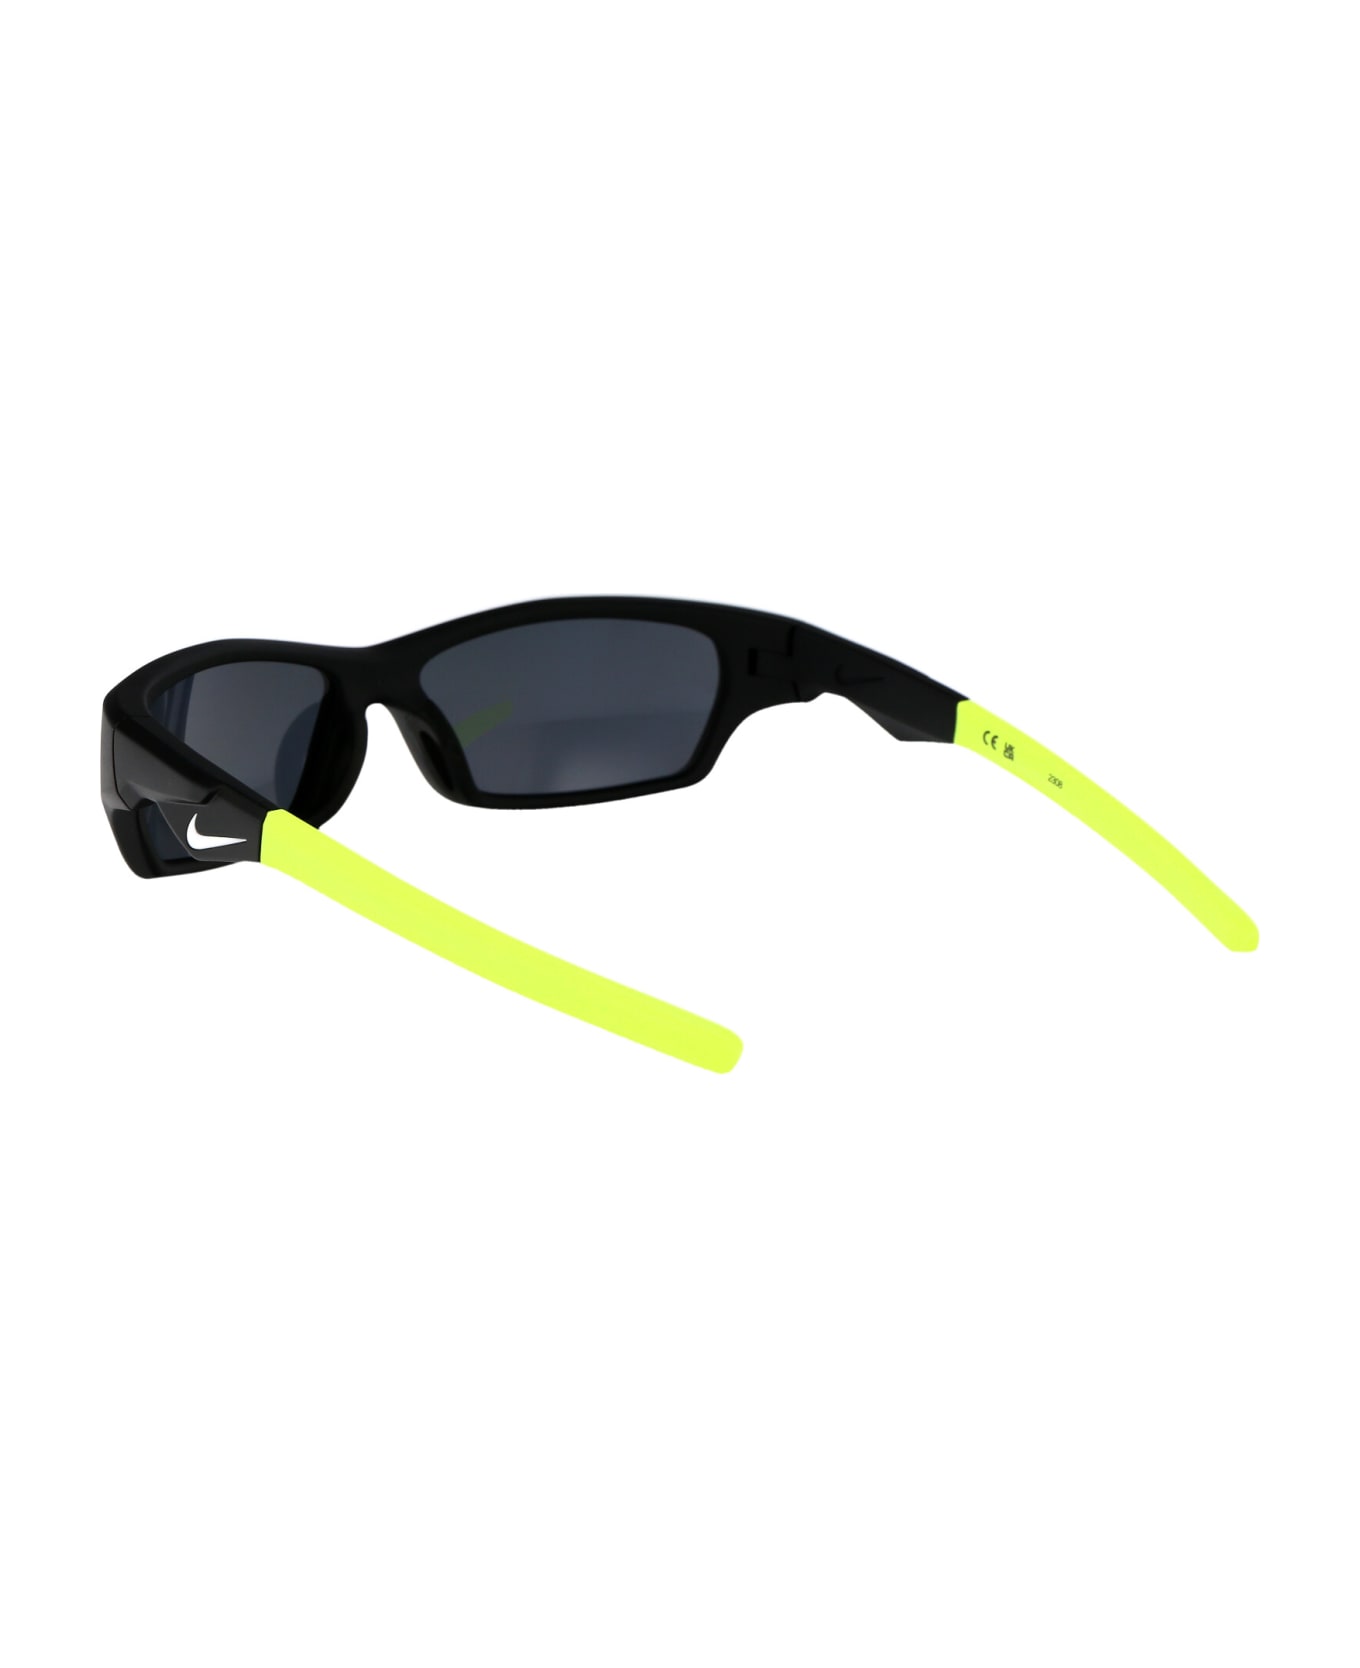 Nike Jolt Sunglasses - 010 MATTE BLACK NOIR MAT サングラス